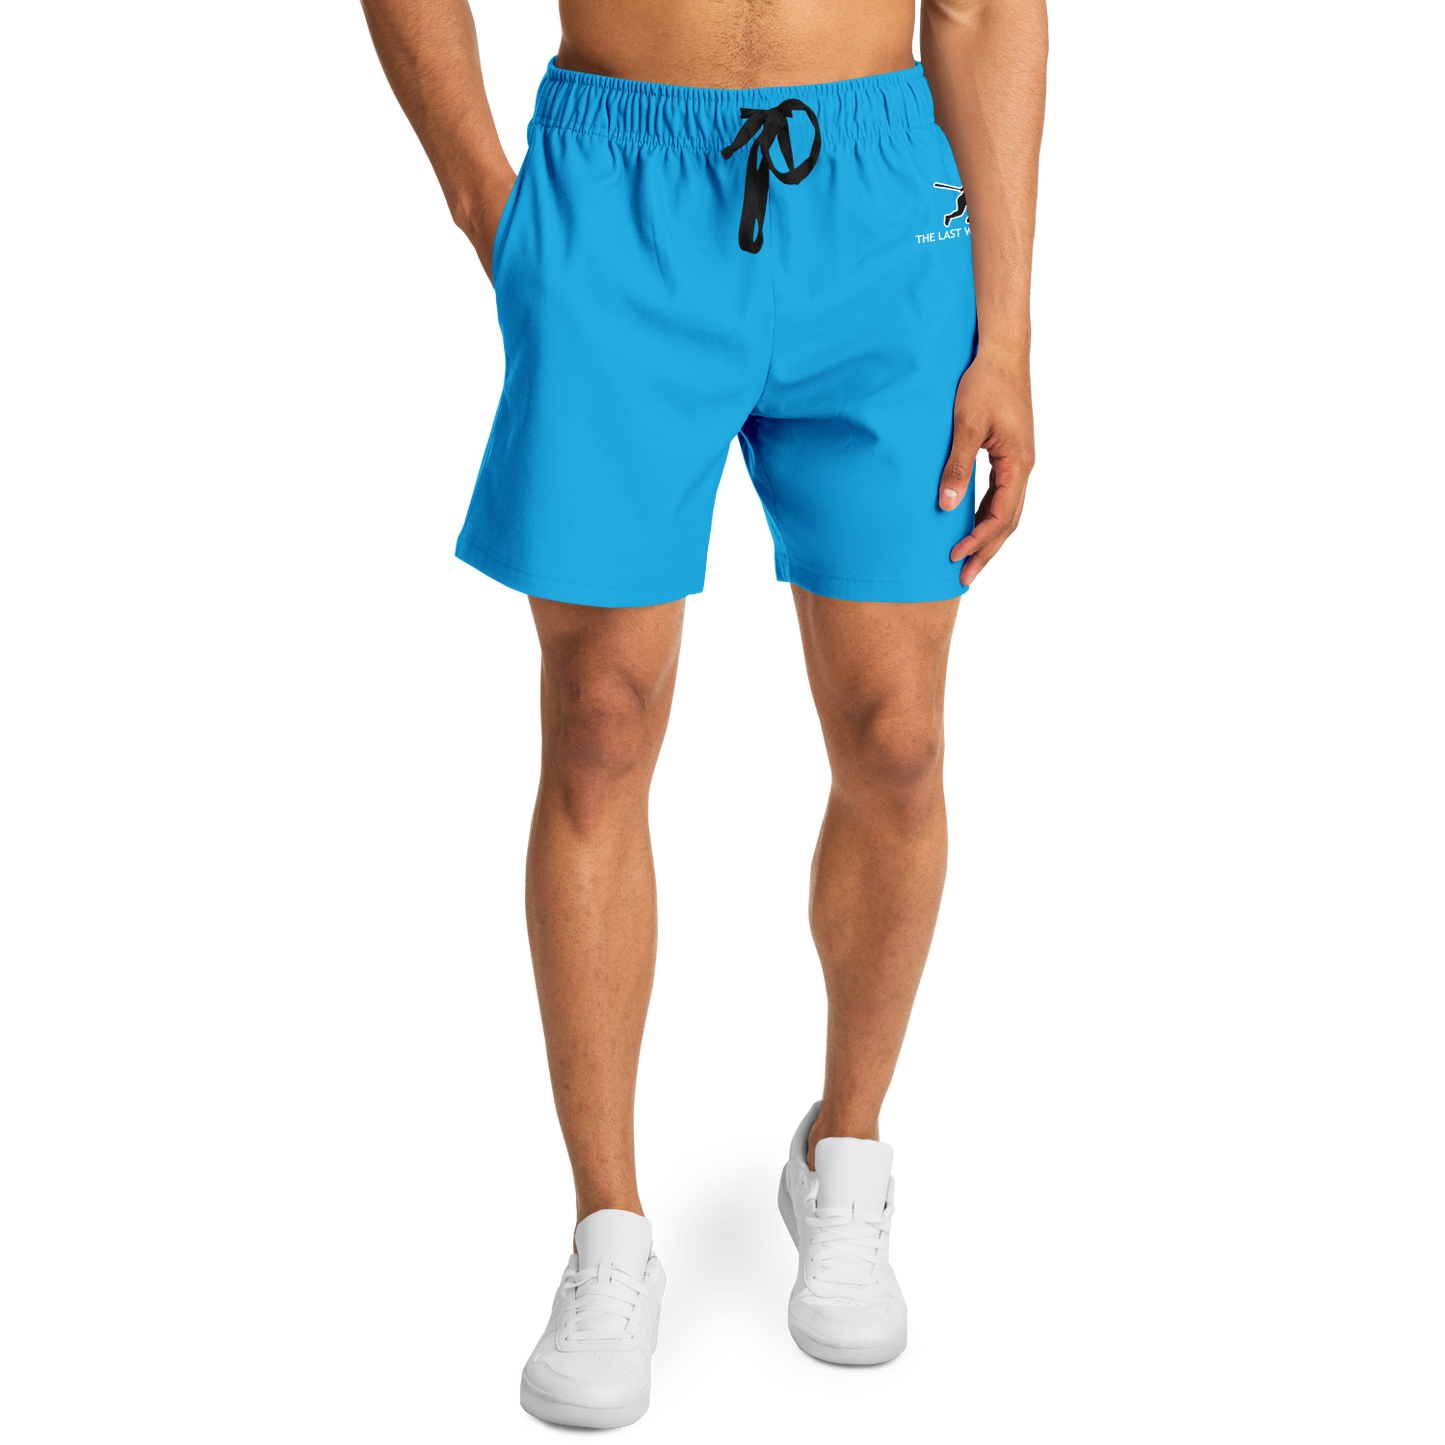 Miami Men's Blue Shorts